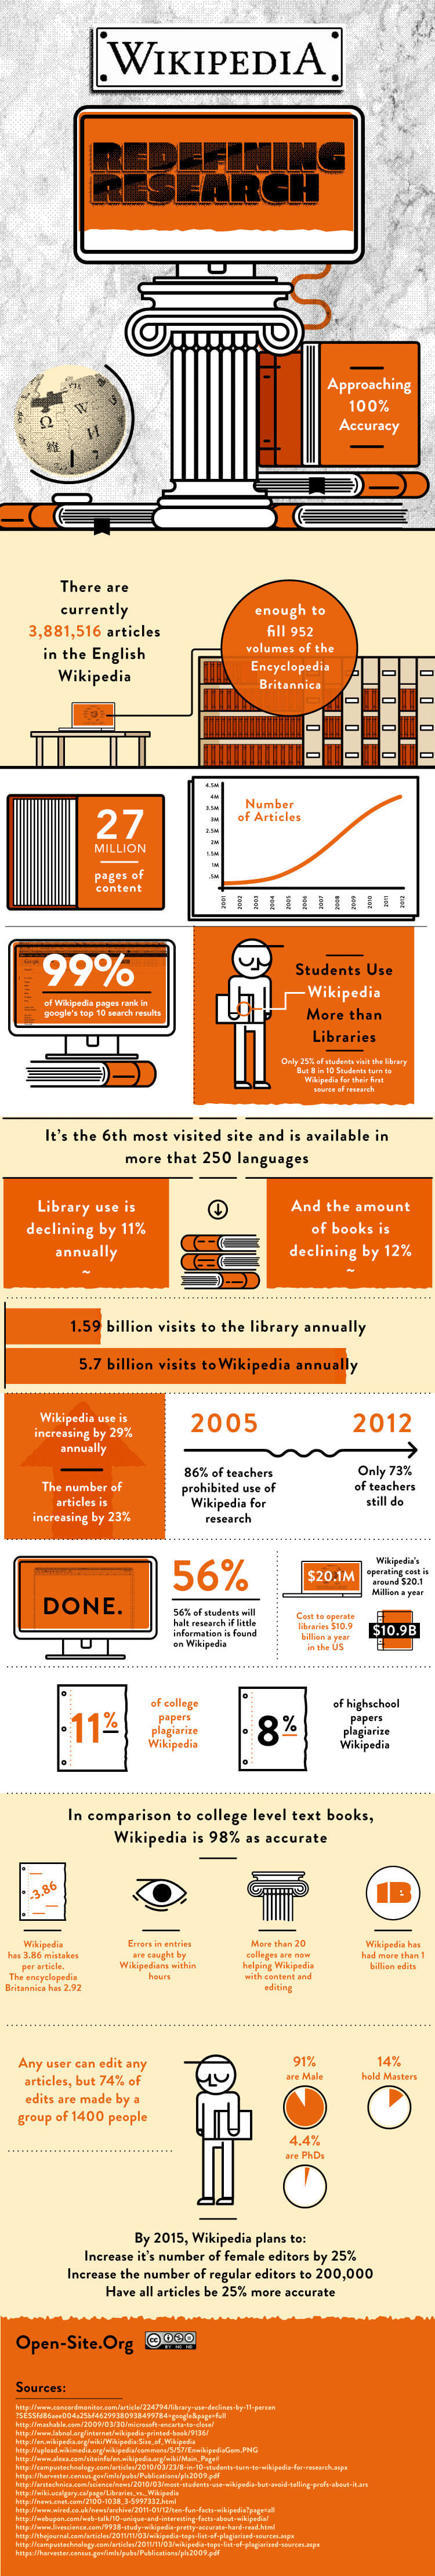 15 Years of Wikipedia through Infographic